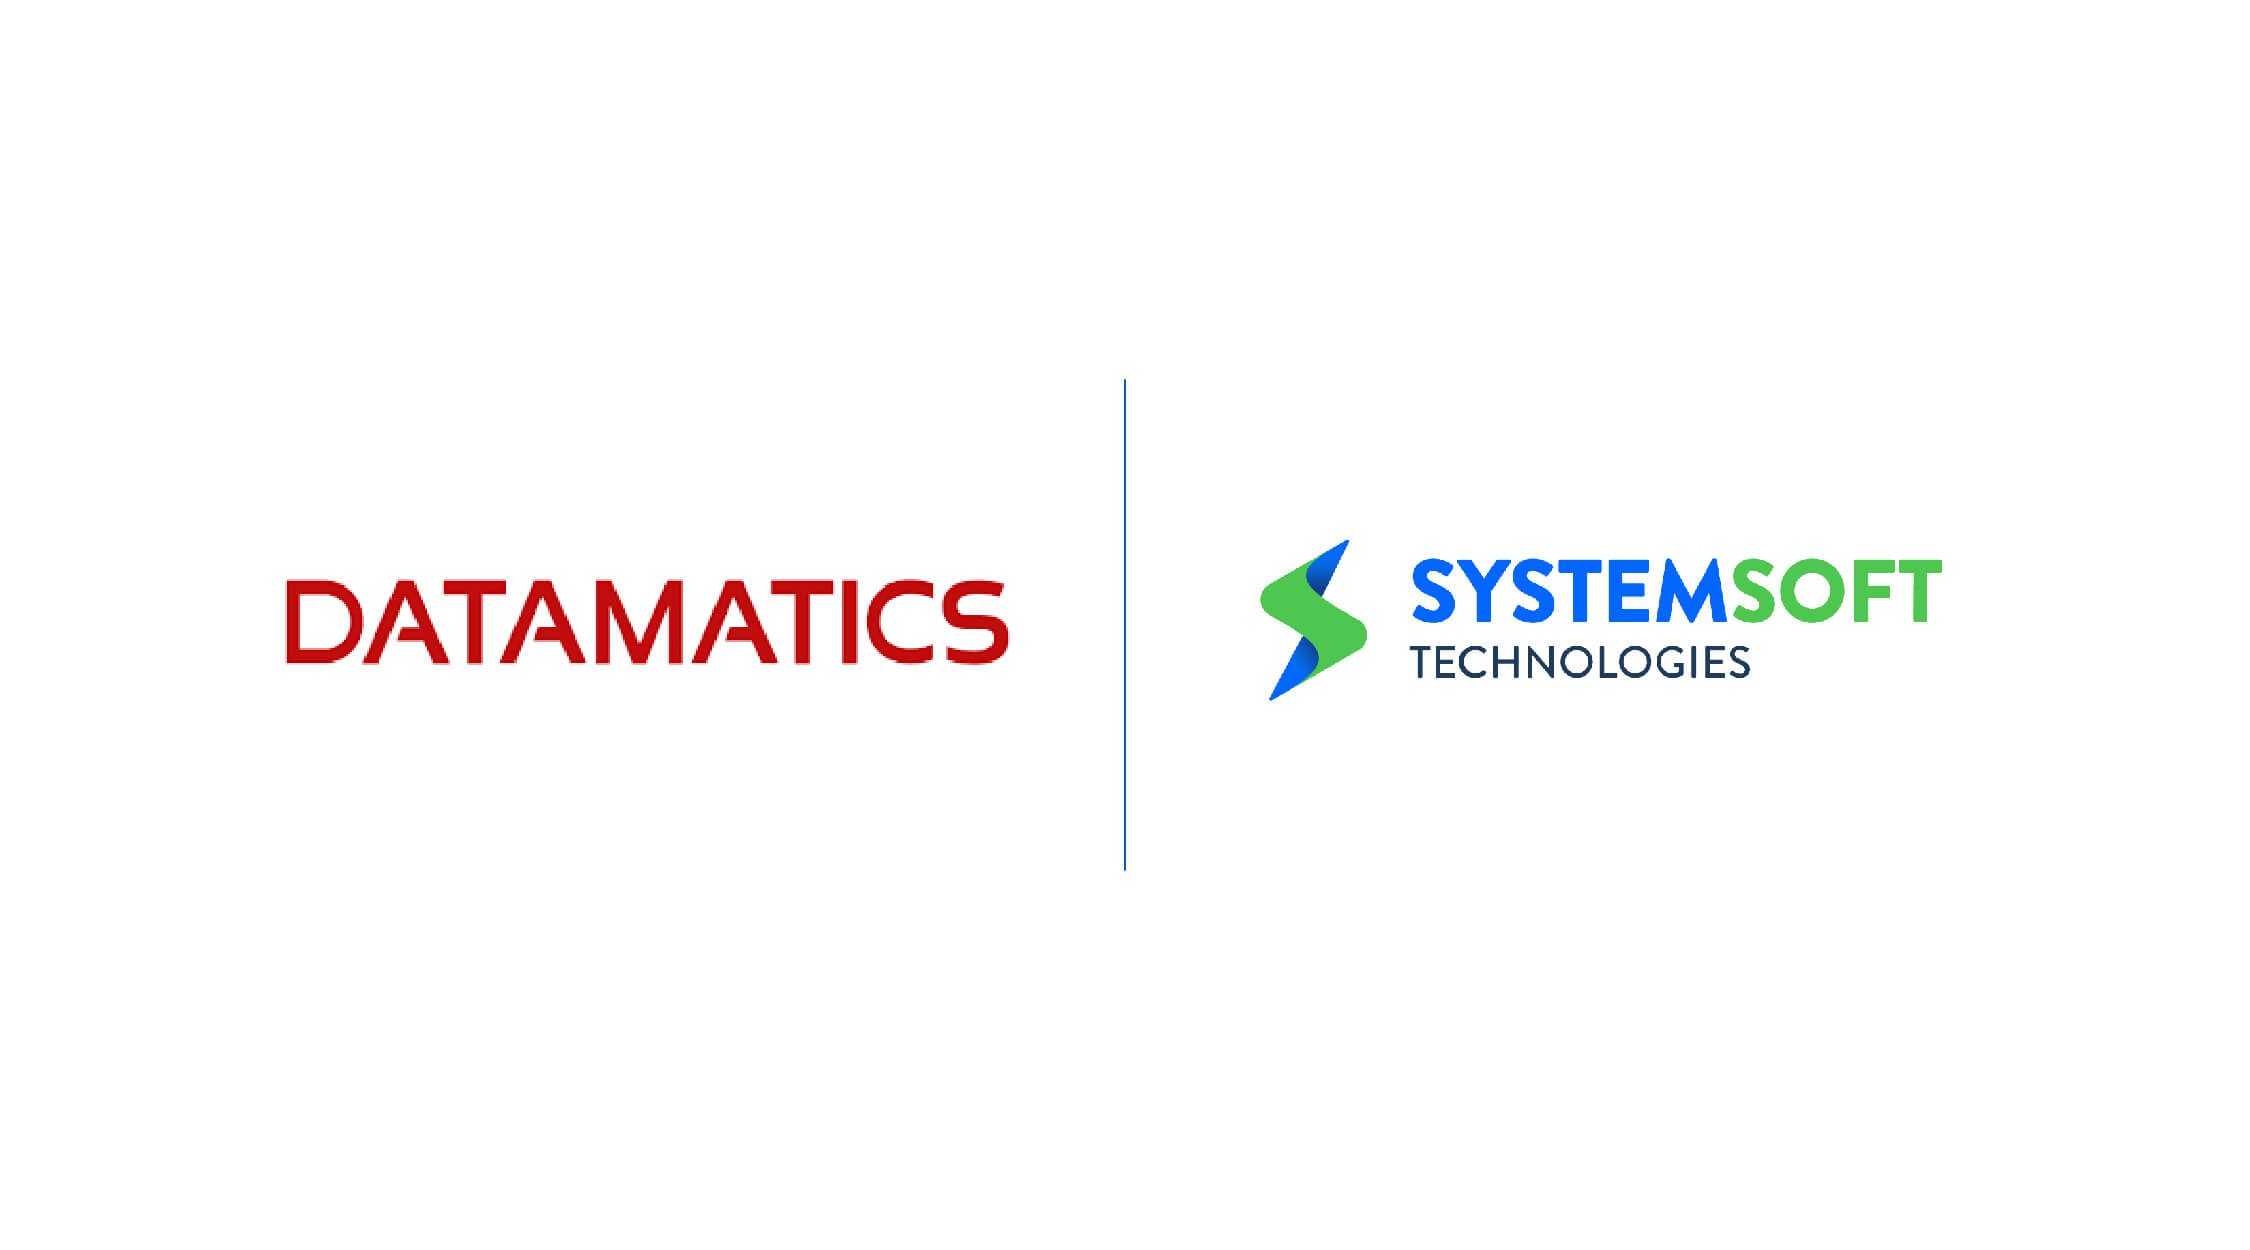 Datamatics and systemsoft technologies partnership logo